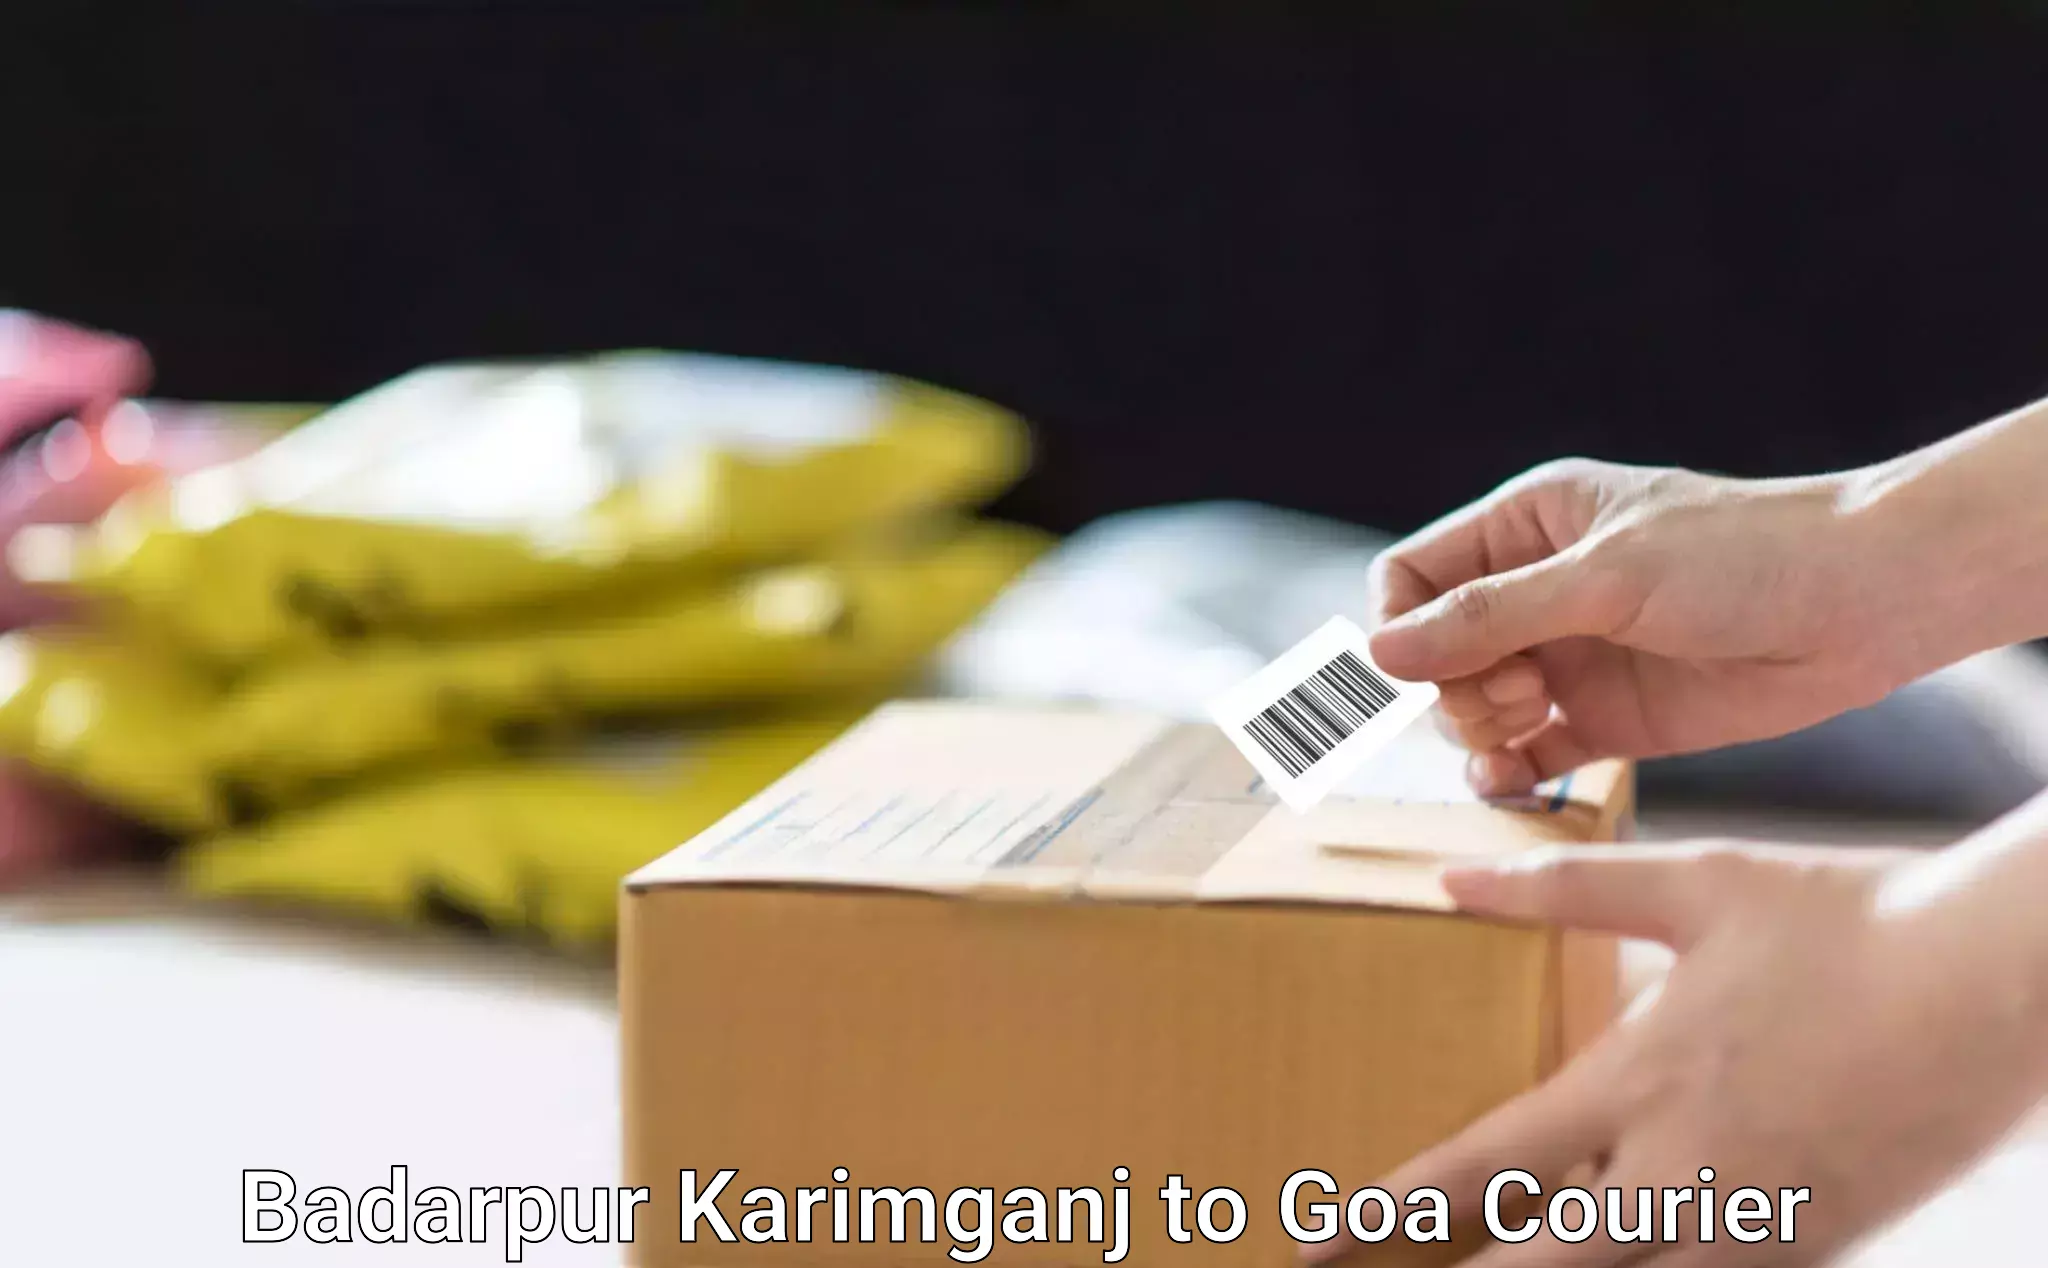 Premium delivery services Badarpur Karimganj to South Goa